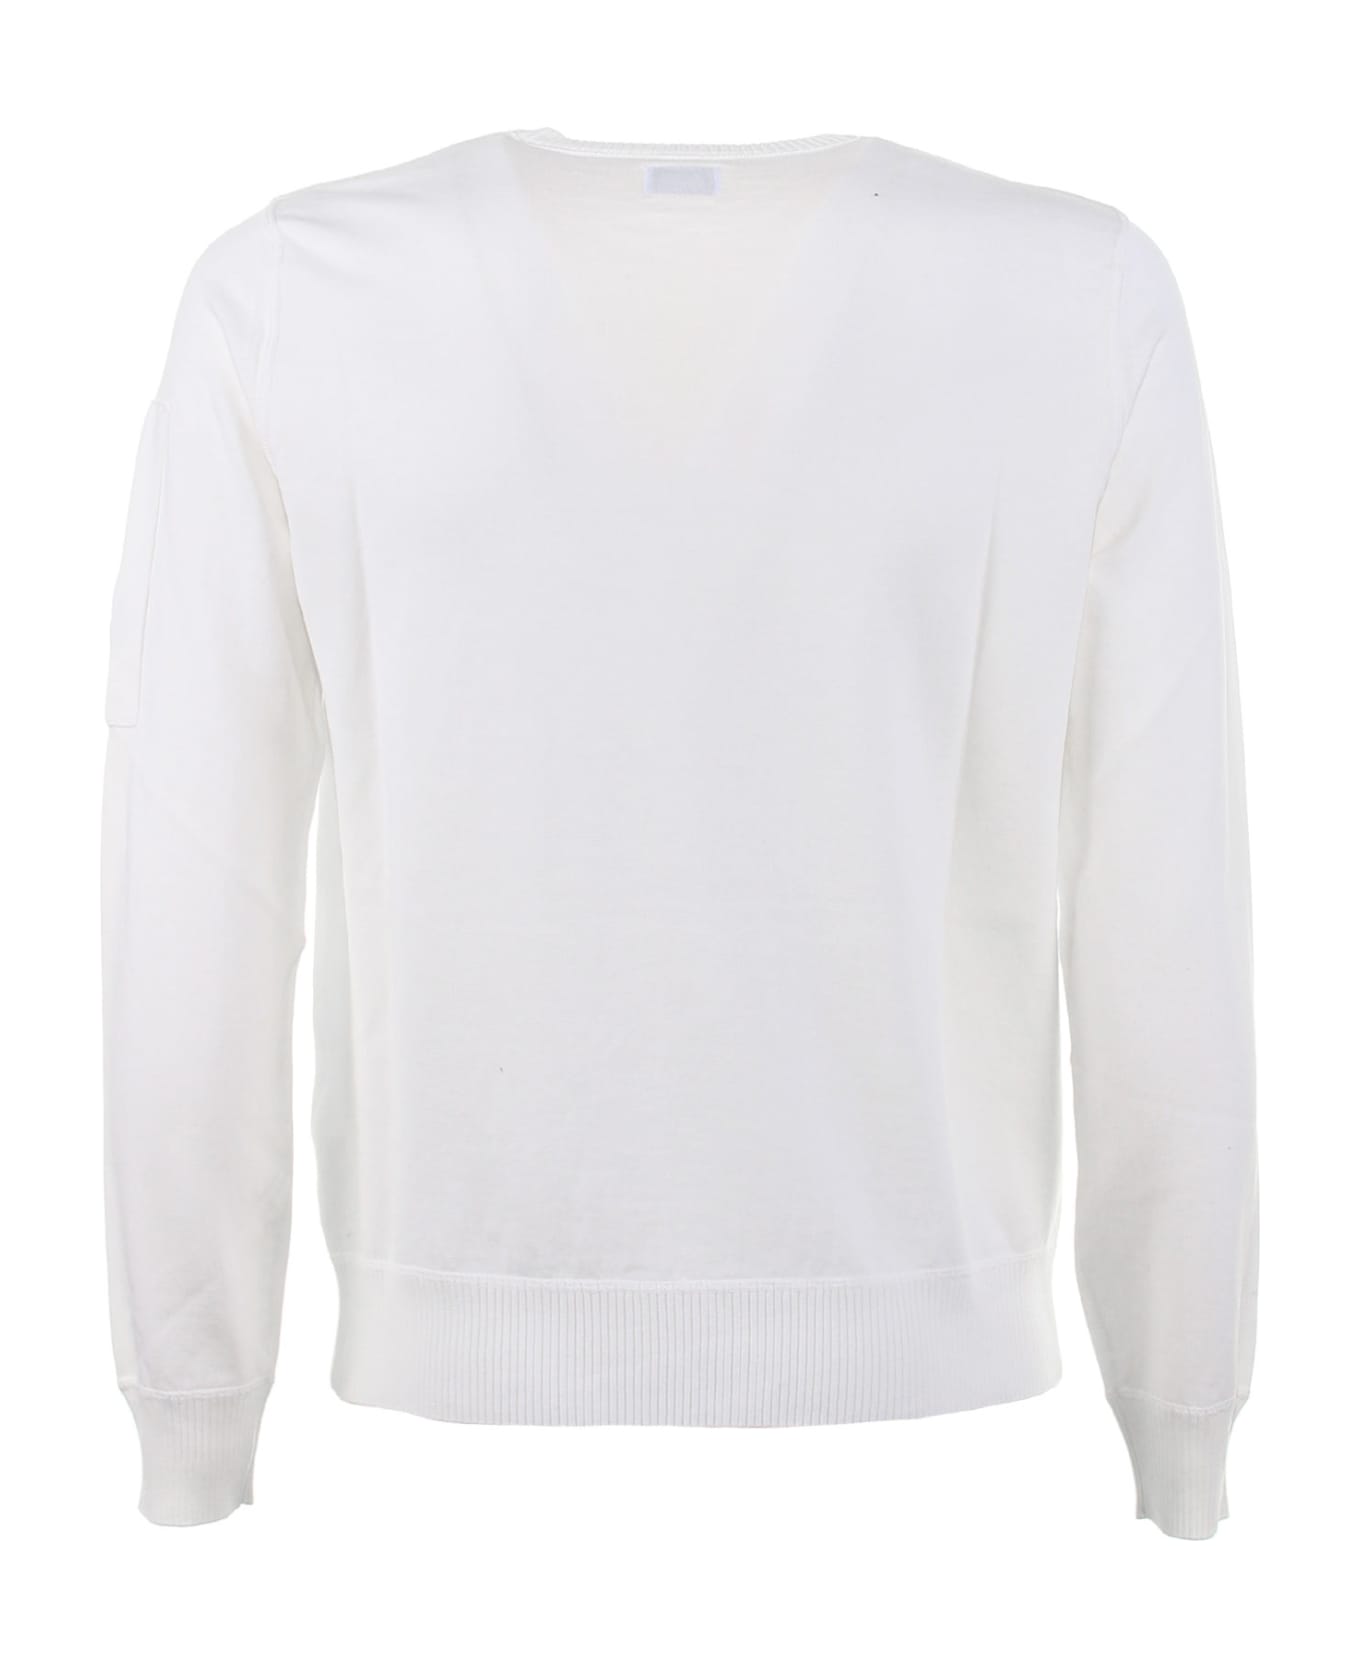 C.P. Company Sweater With Iconic Logo On The Sleeve - GAUZE WHITE